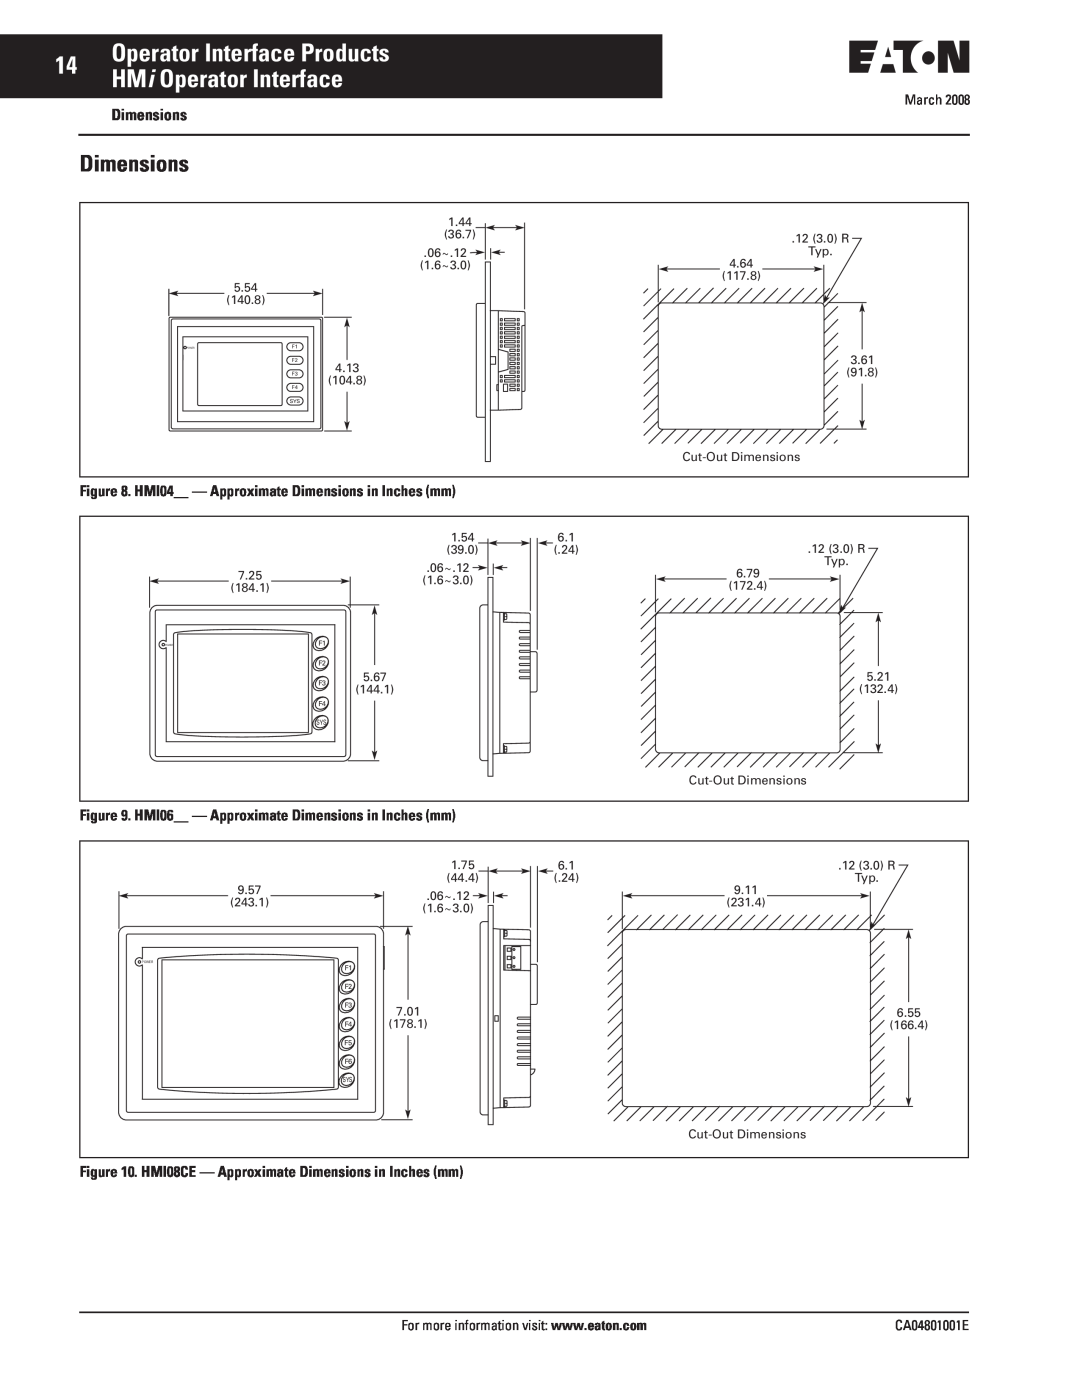 Eaton Electrical CA04801001E manual Dimensions, Operator Interface Products HMi Operator Interface 